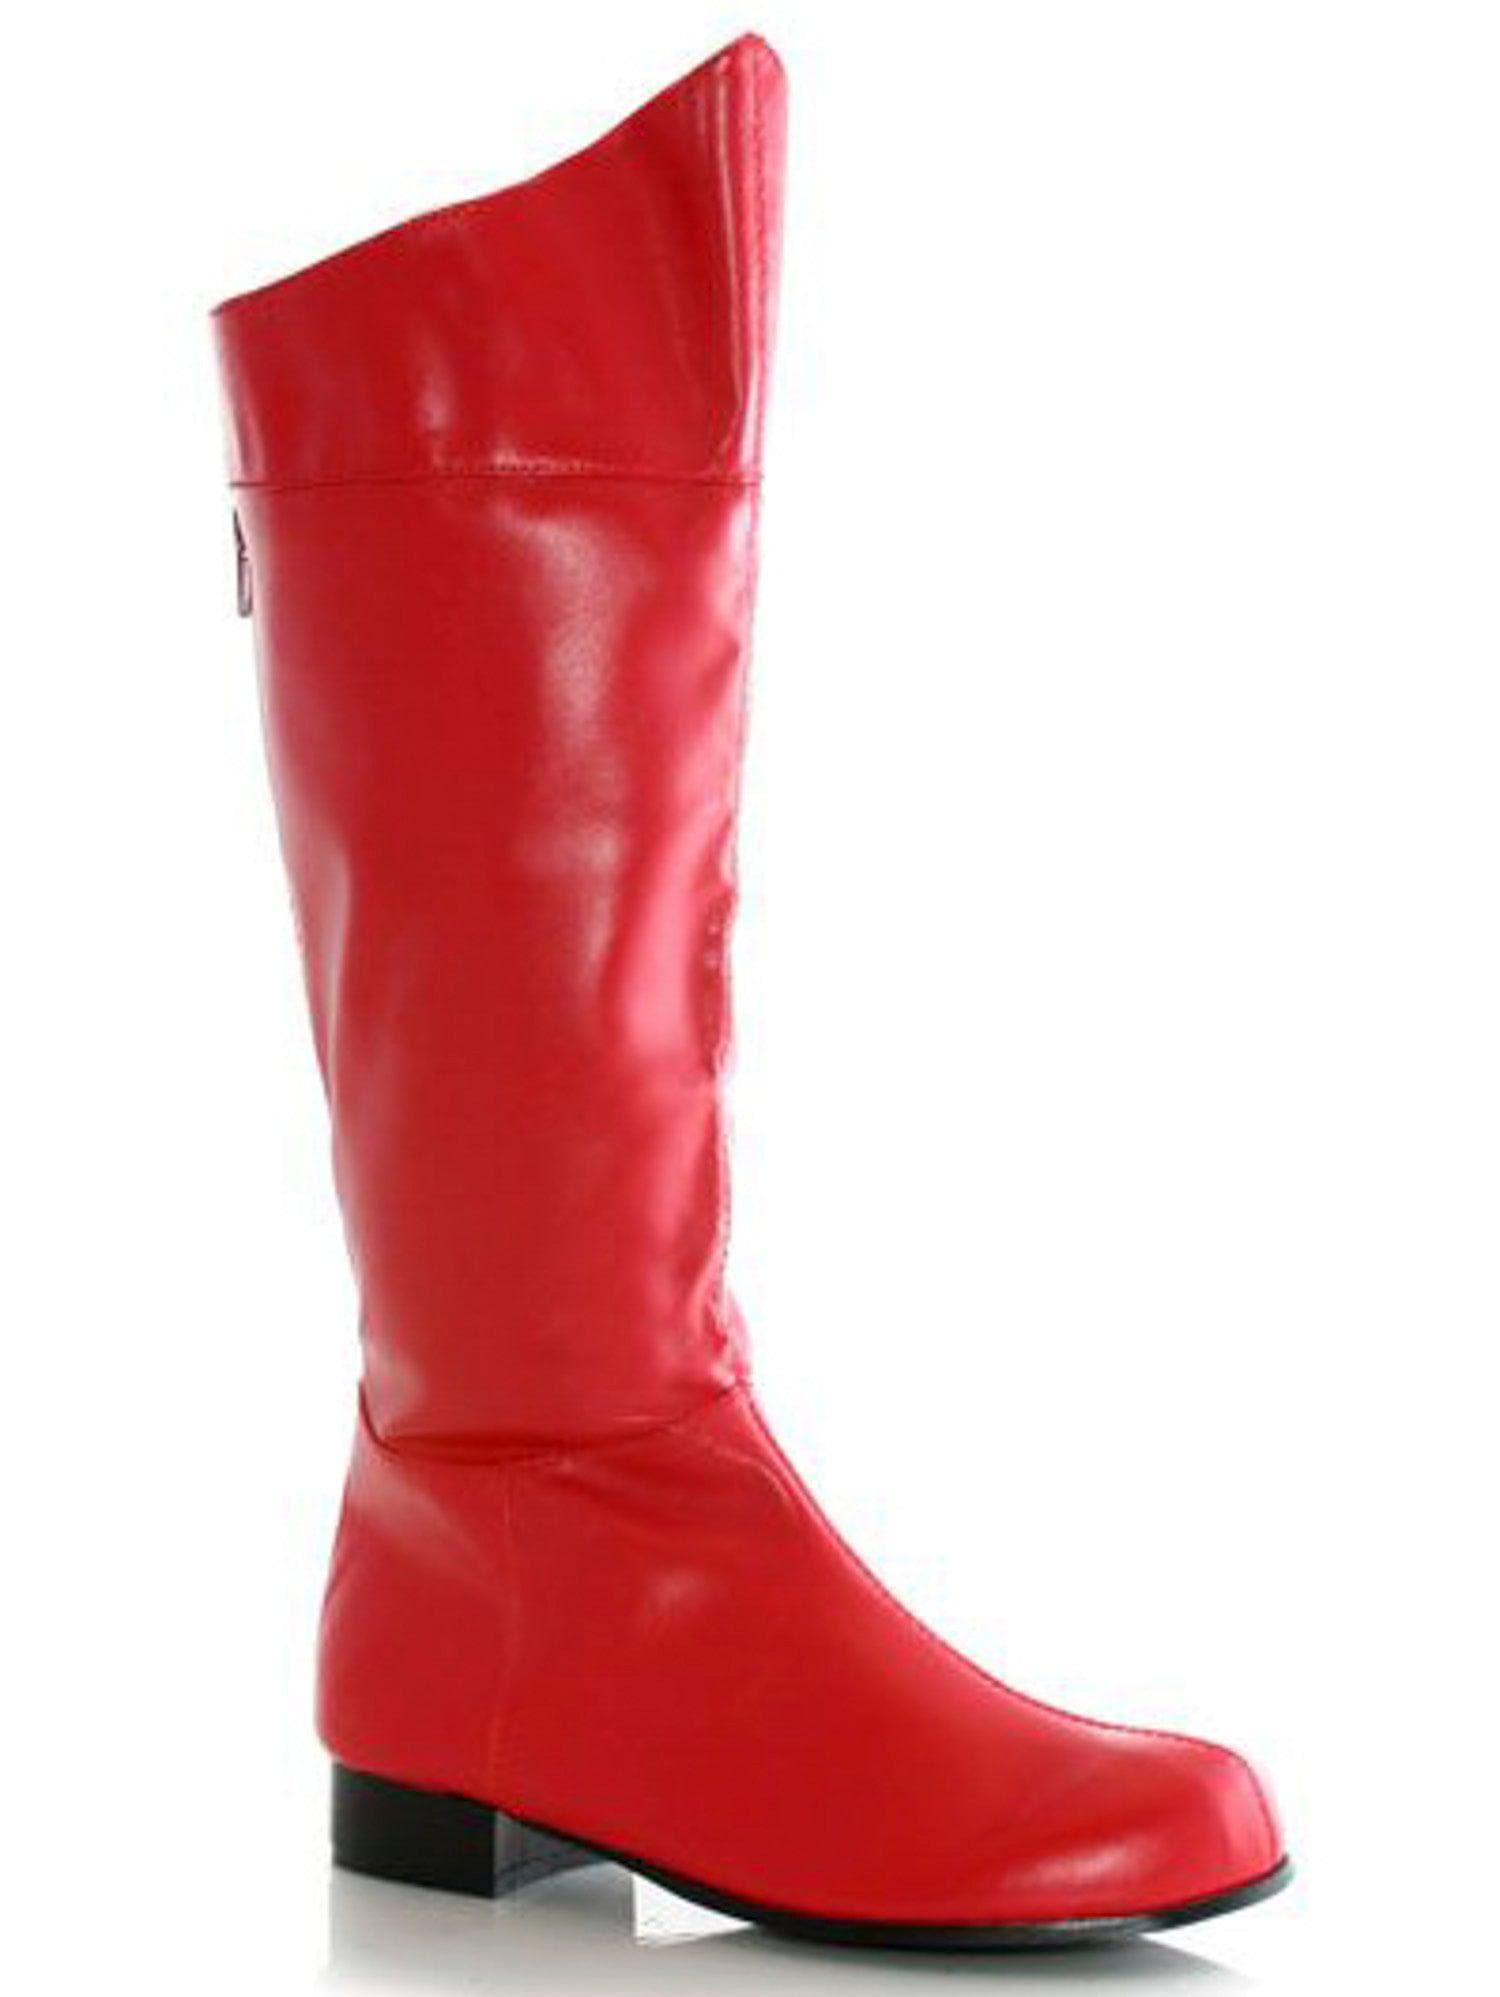 Adult Red Superhero Boots - costumes.com